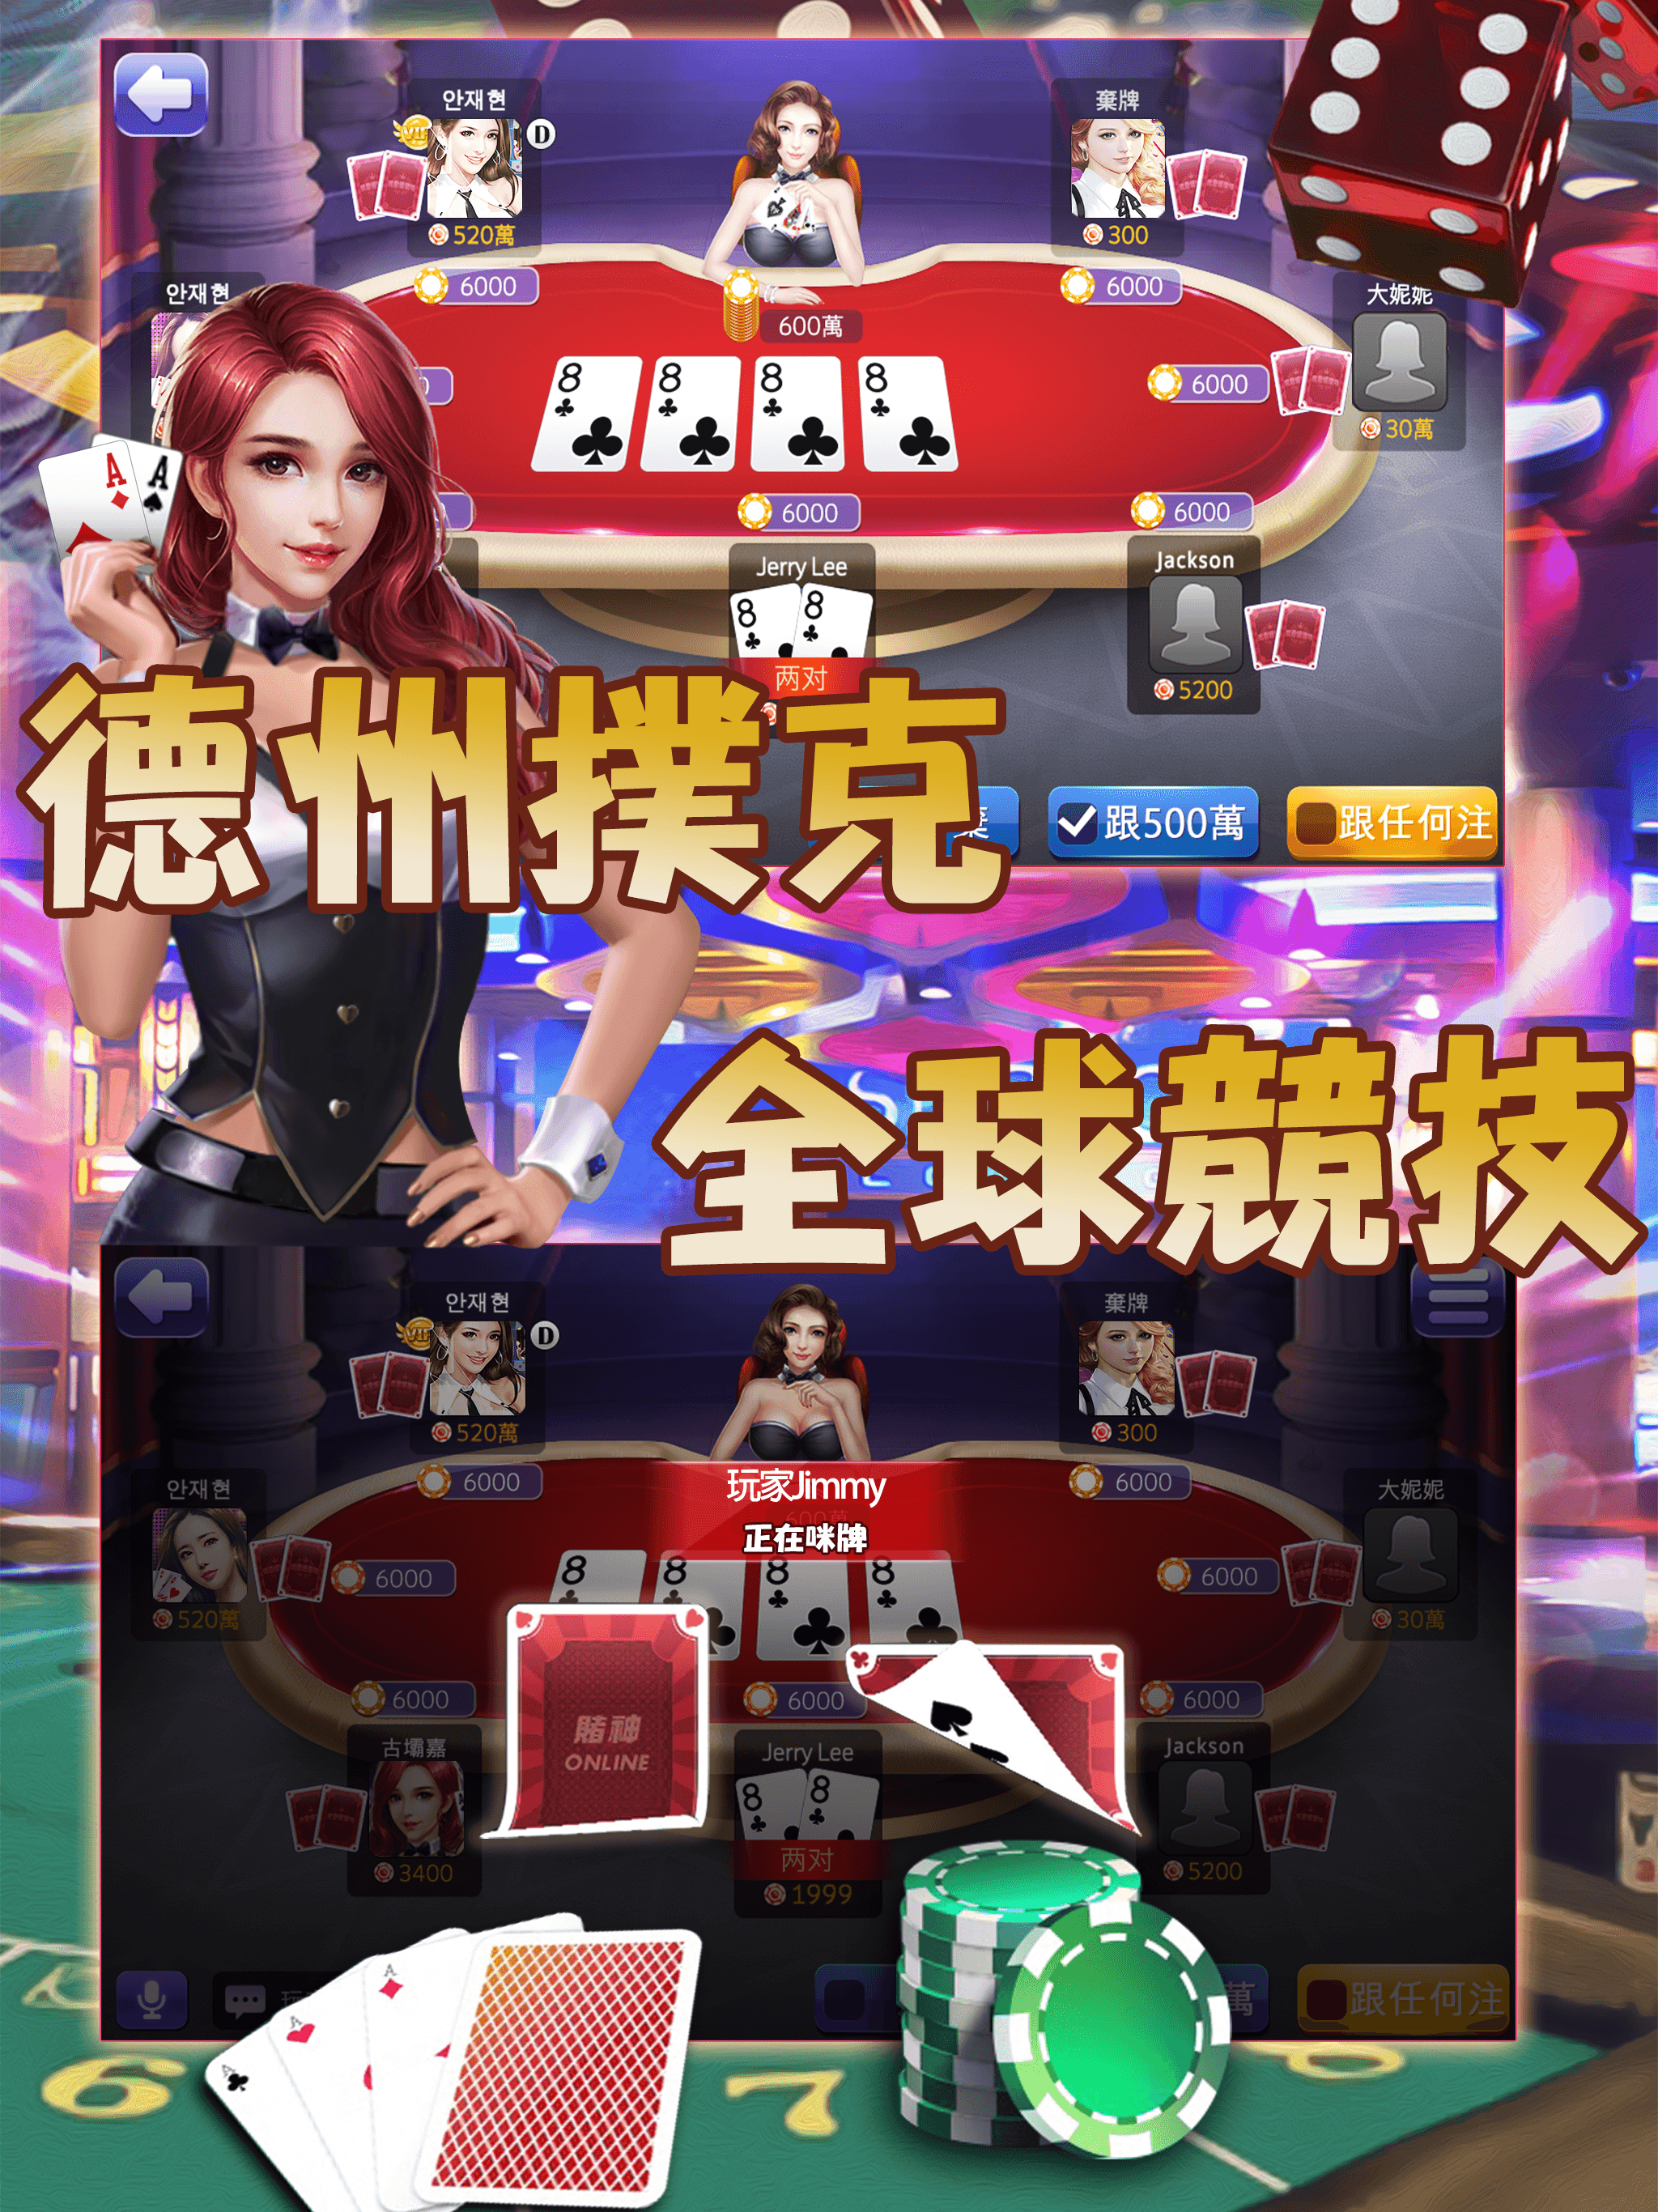 Poker Slots online, free